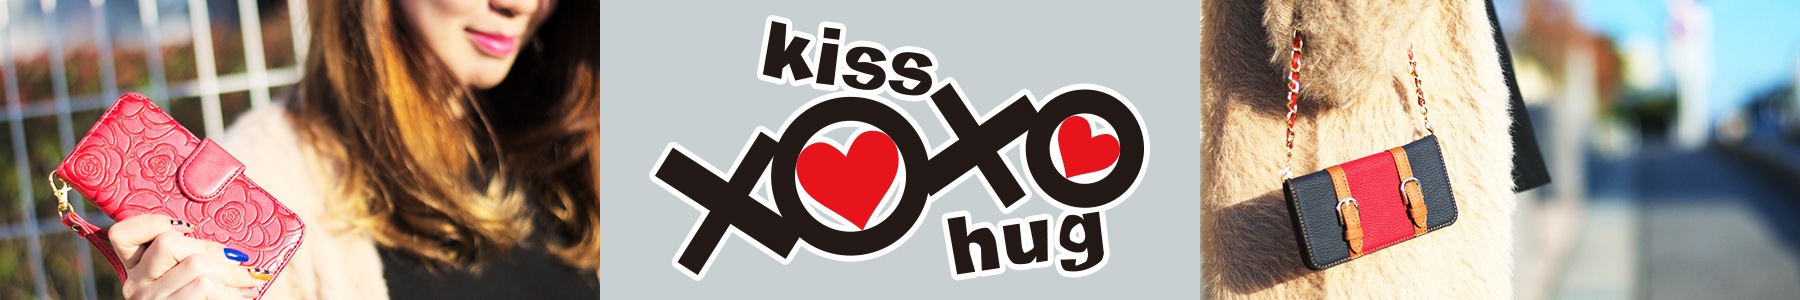 xoxo kiss x hug